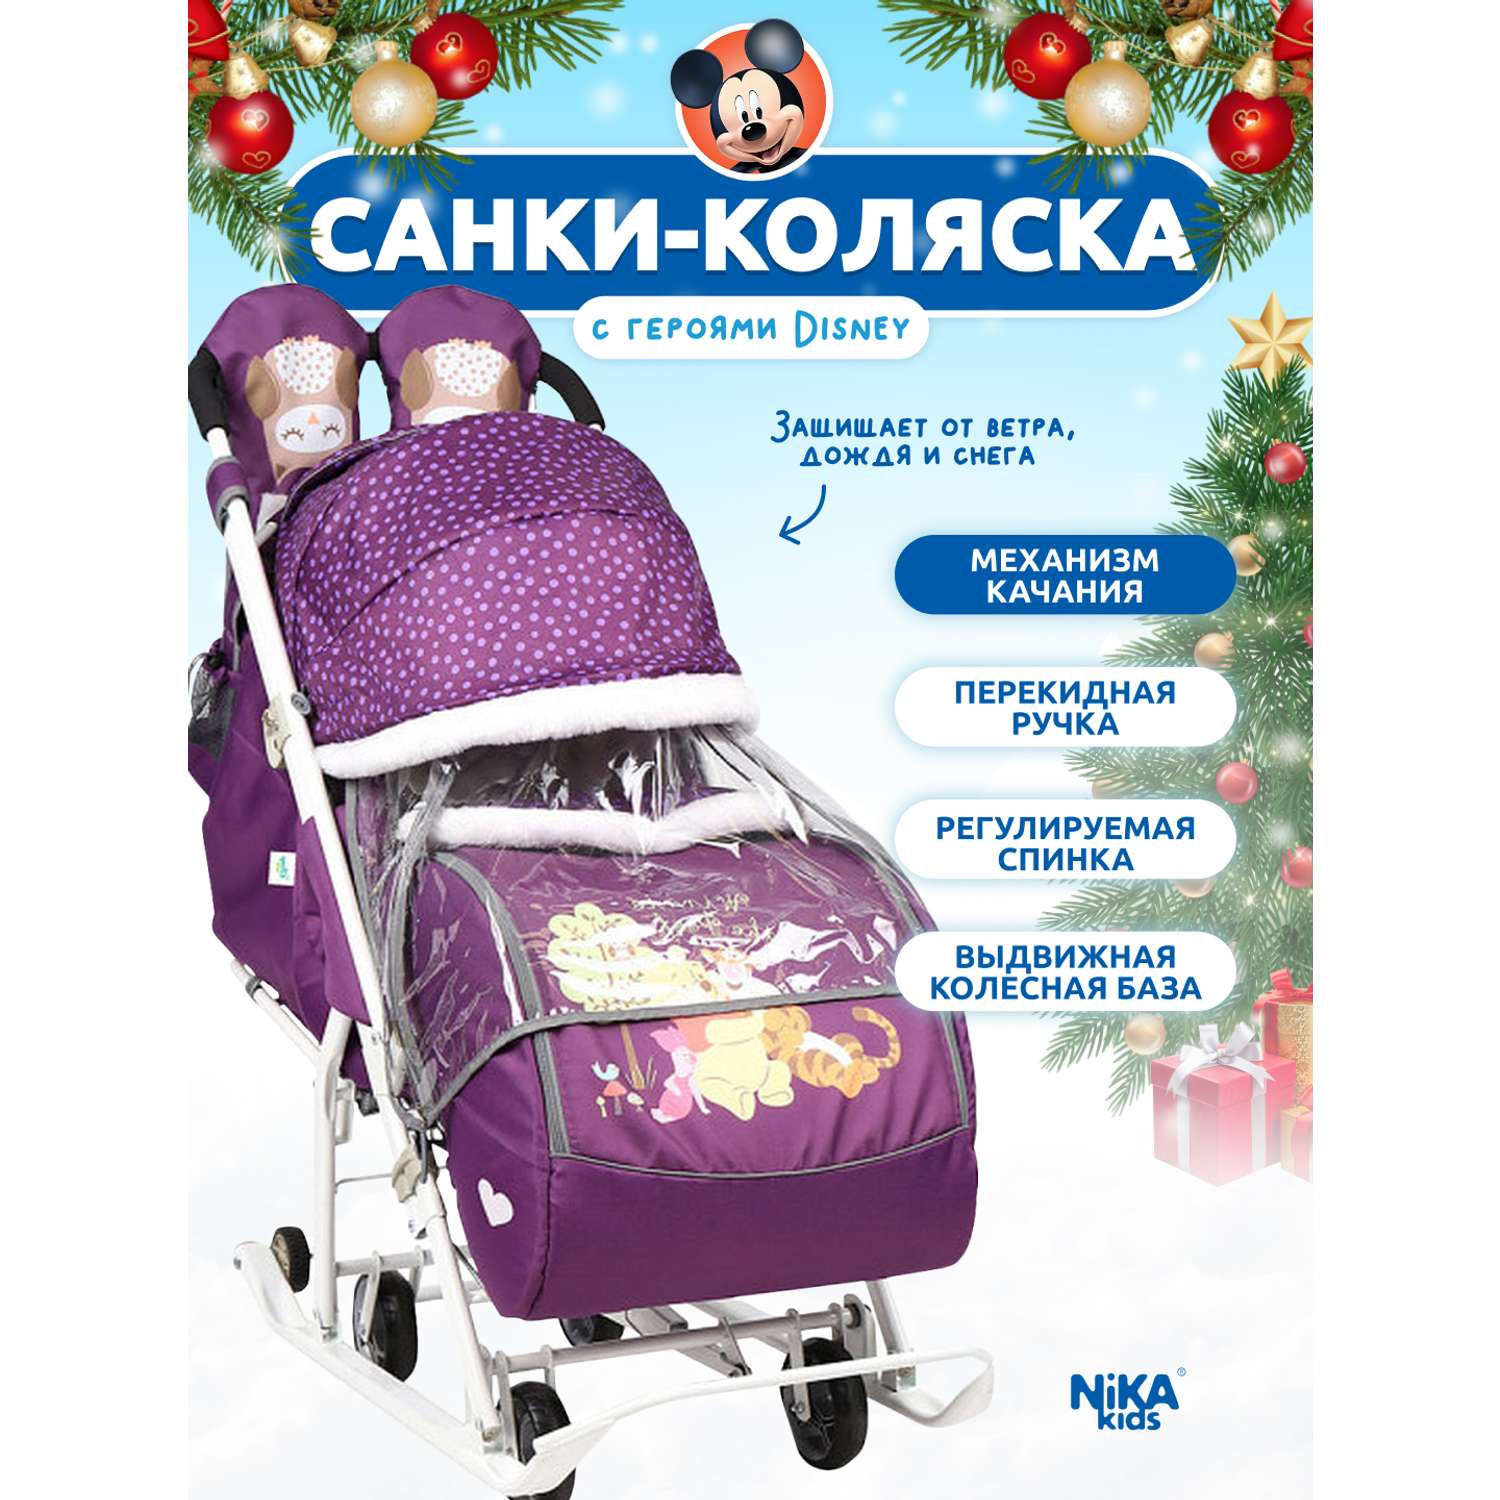 Зимние санки-коляска Nika kids для детей - фото 1